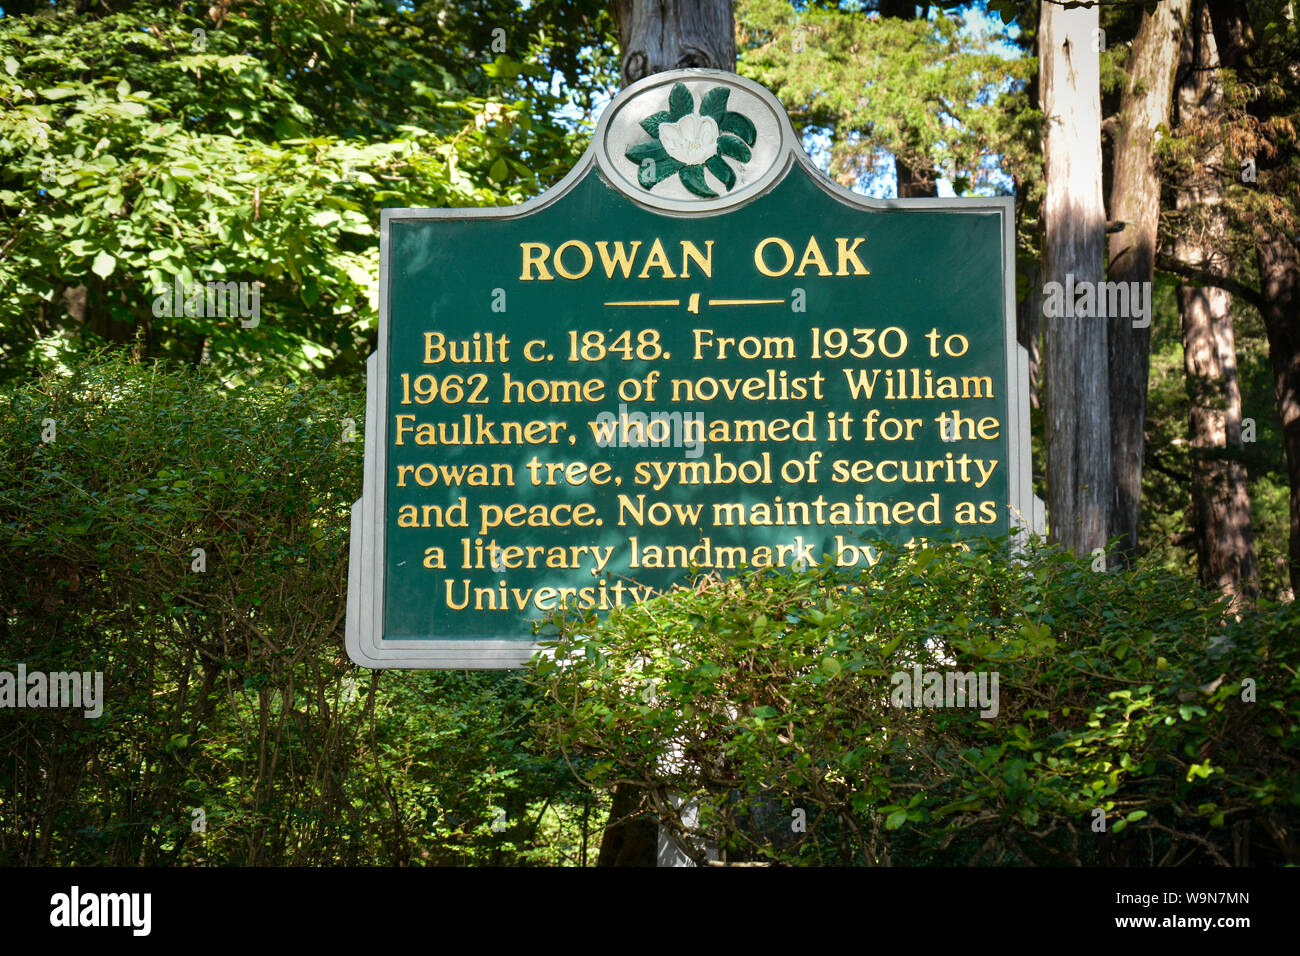 A Literary landmark marker for Rowan Oak, the home of Pultizer Prize winning novelist William Faulkner, Oxford, MS, USA, Stock Photo